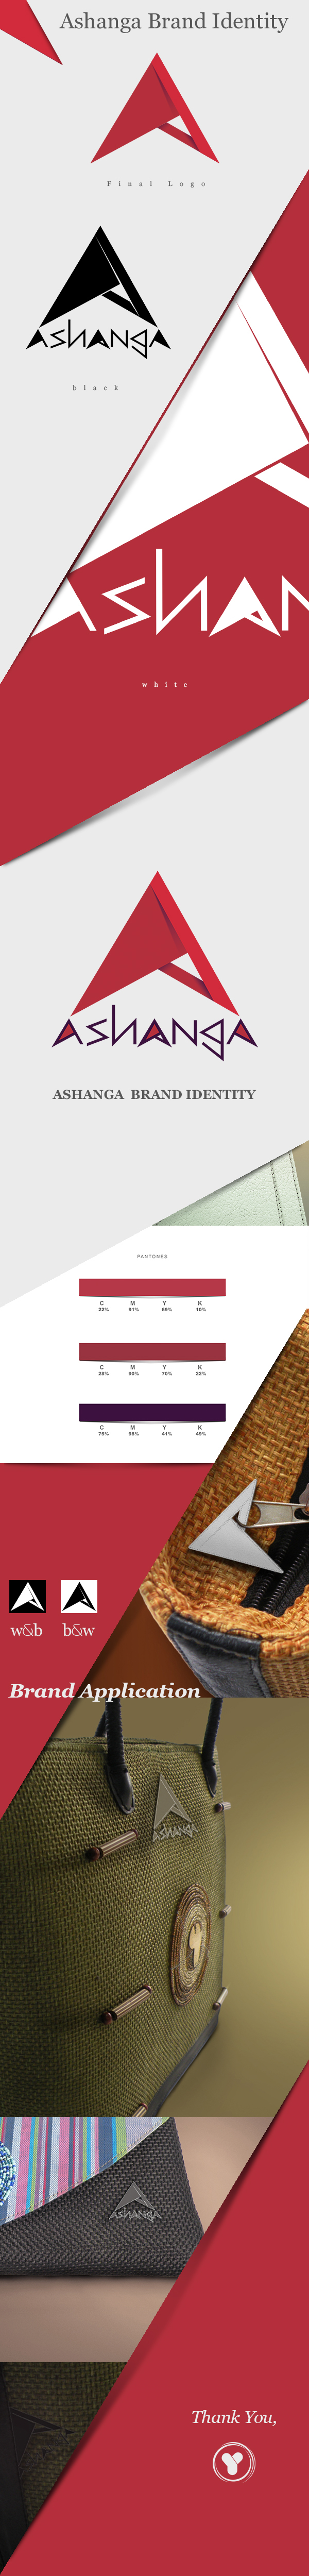 ashanga design Concepting heritage history modernafrica kenya iconography digital vc branded Retro simple depth UI